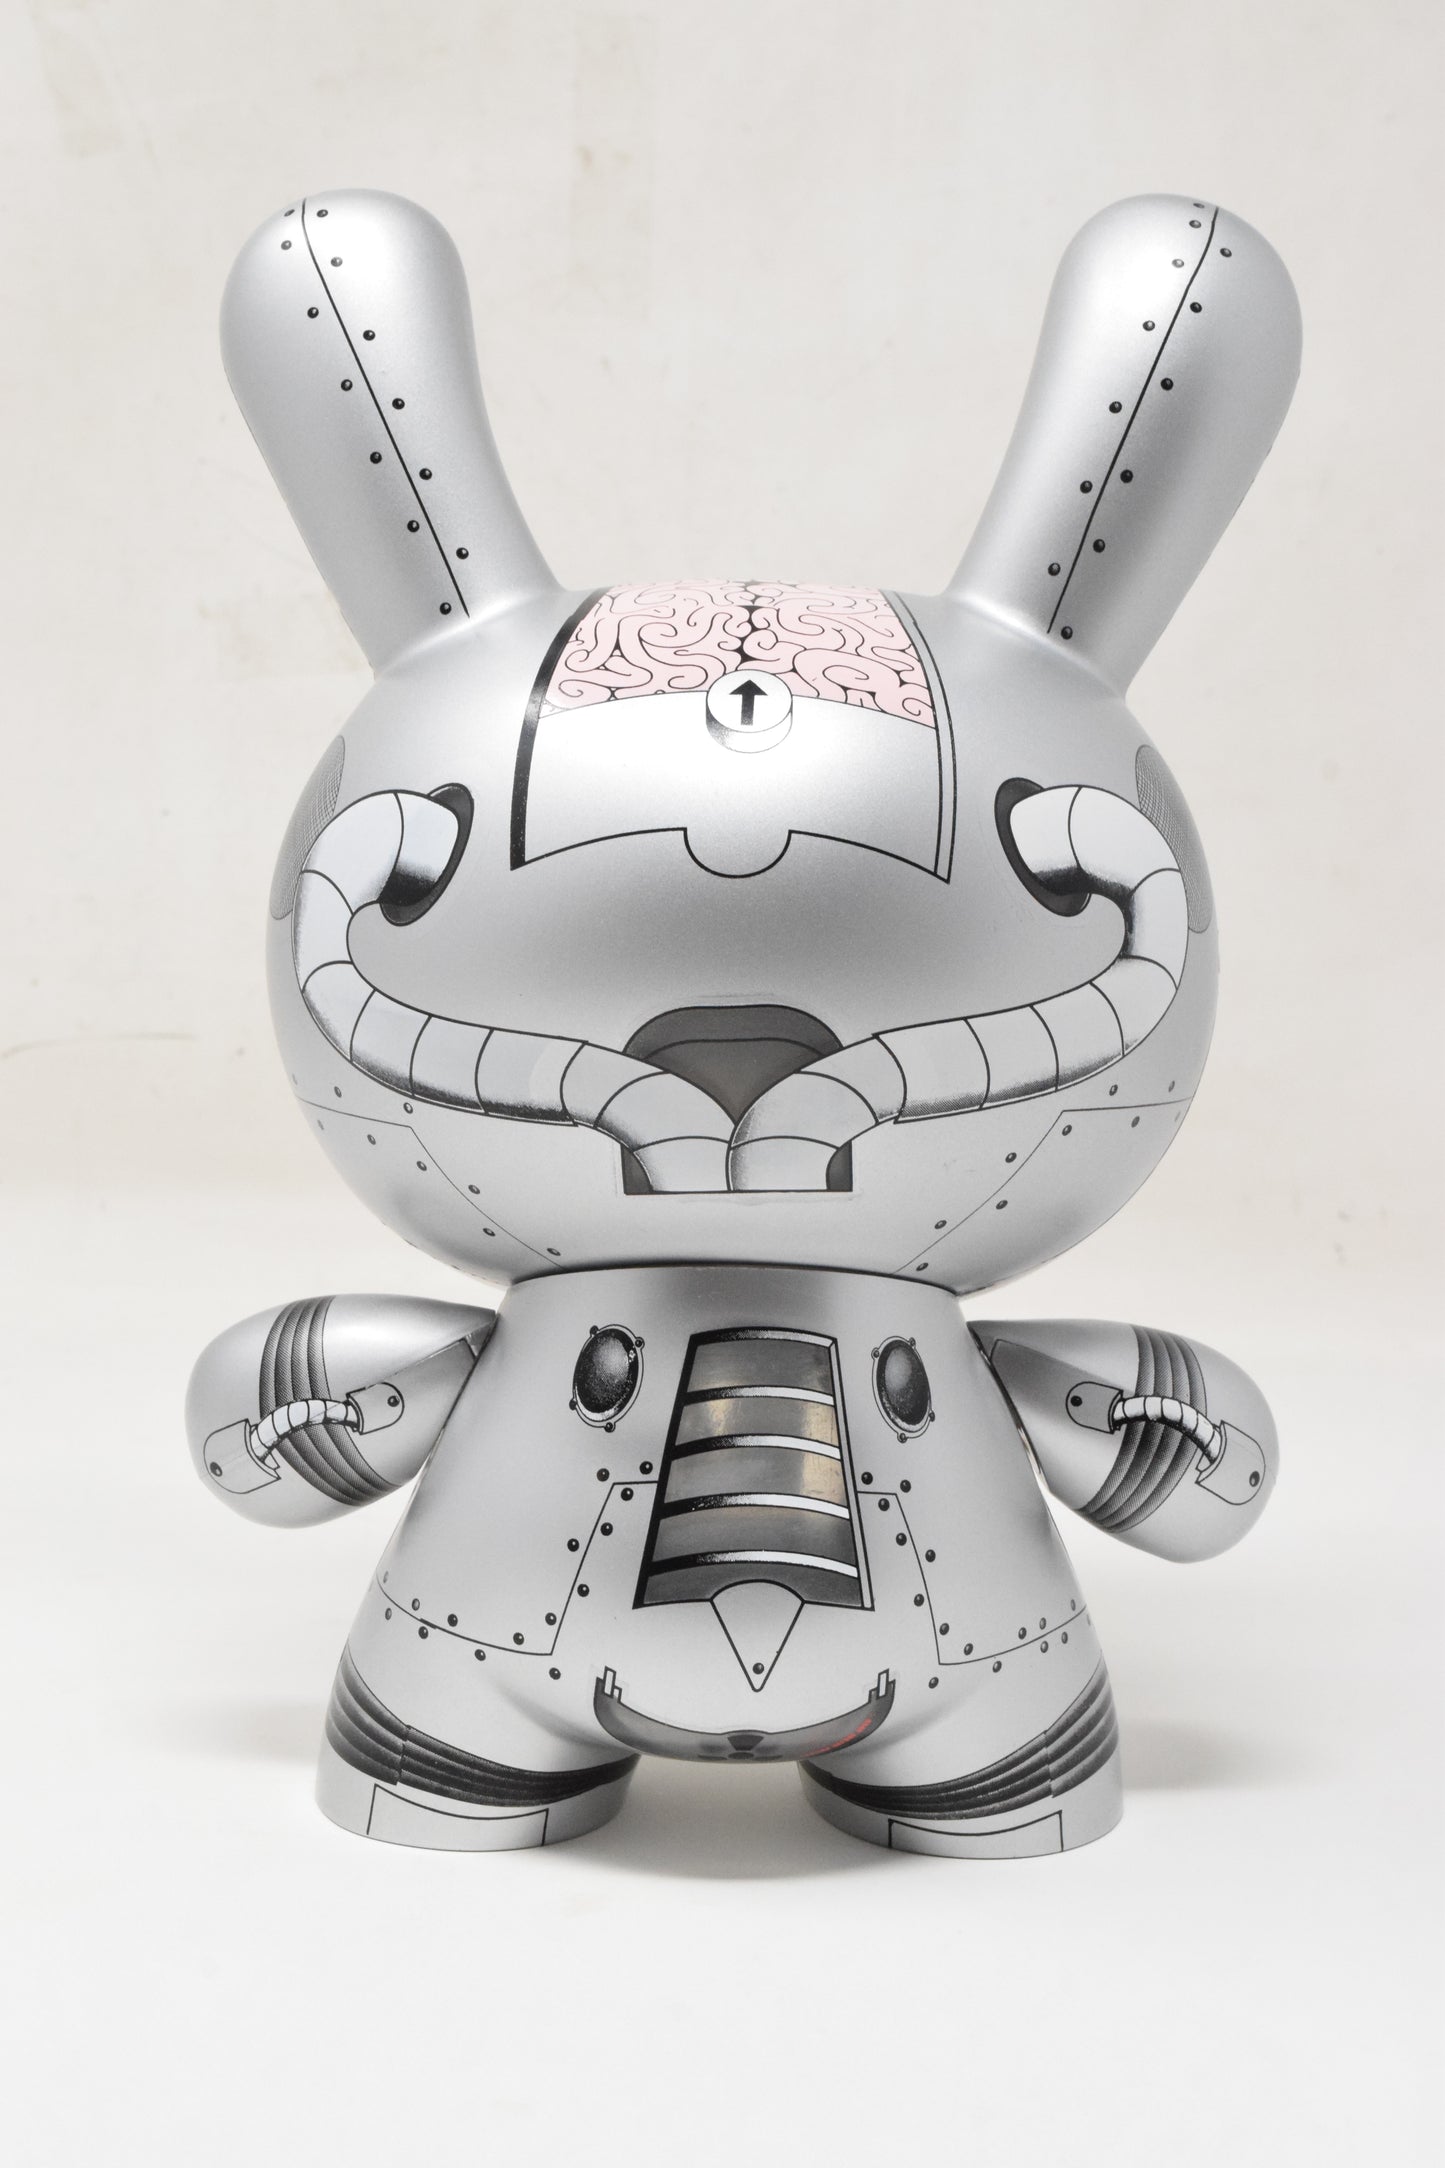 DER Kidrobot Roboduny Dunny Robot 8" Vinyl Figure